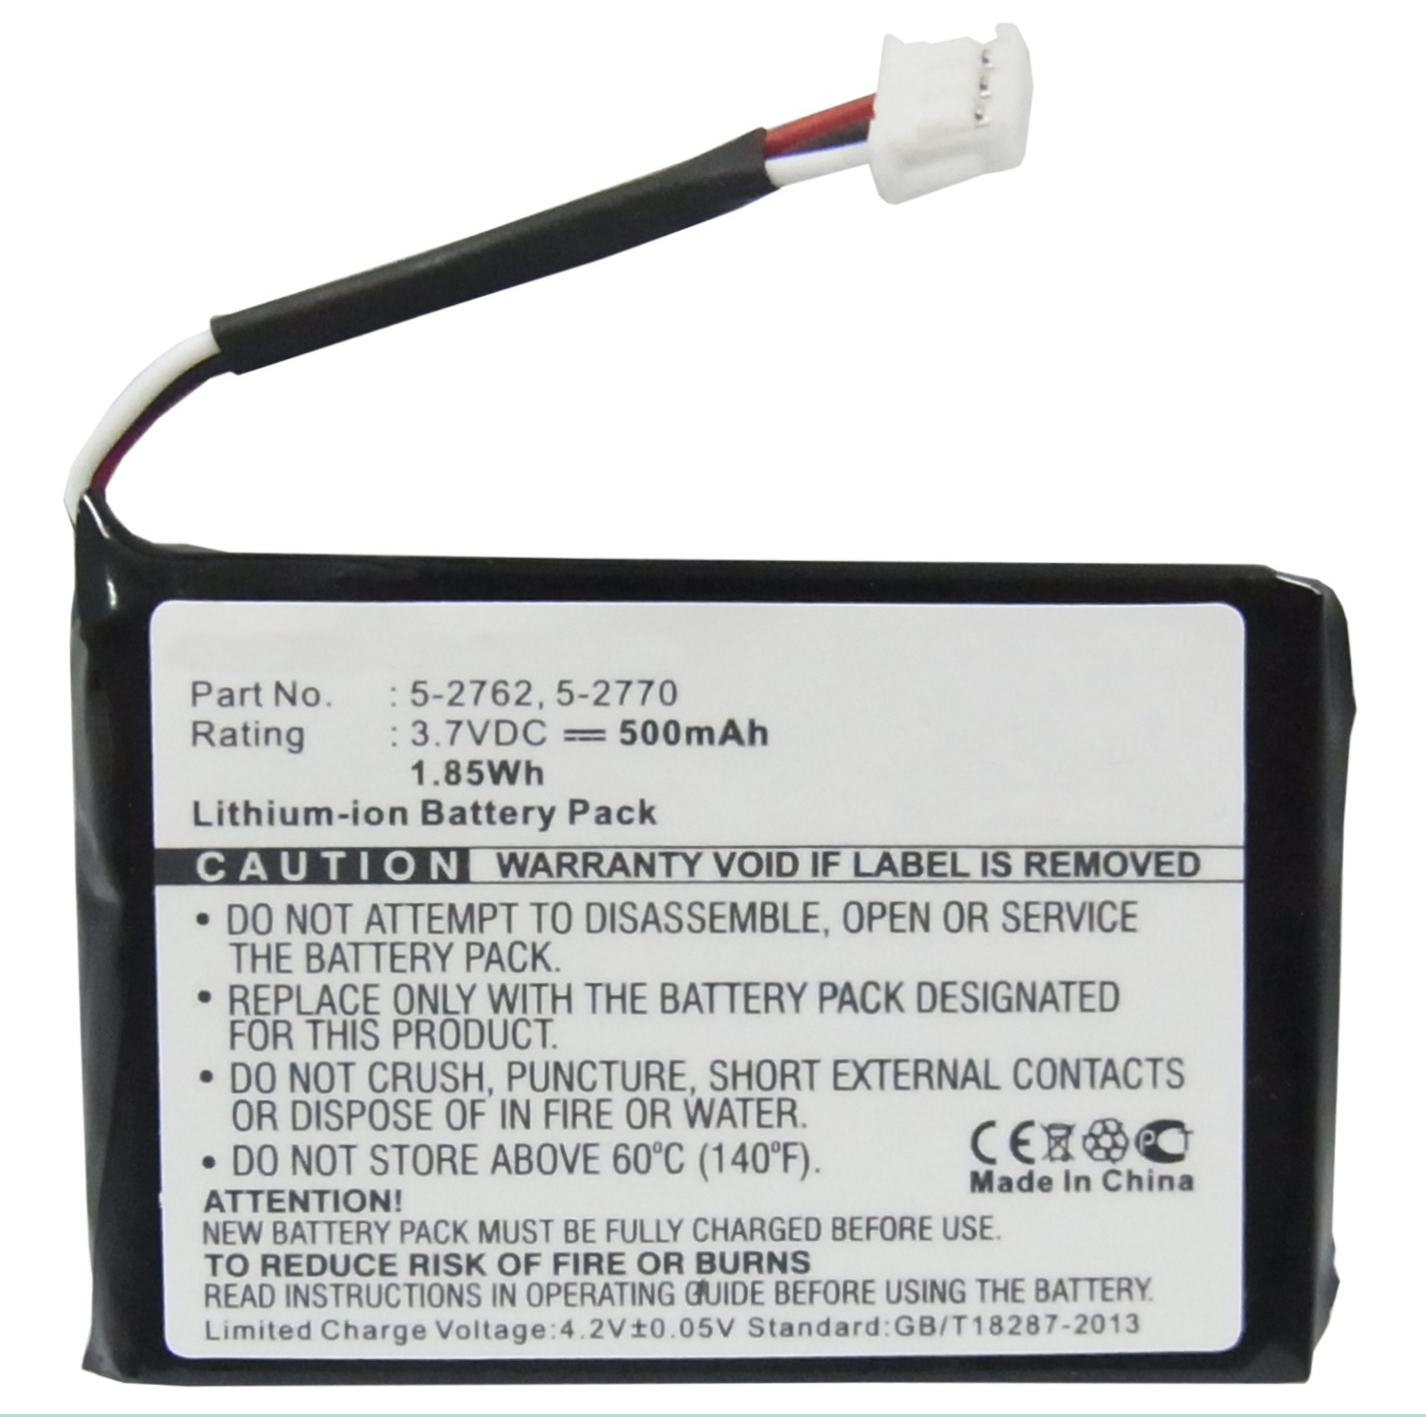 Batteries for GECordless Phone